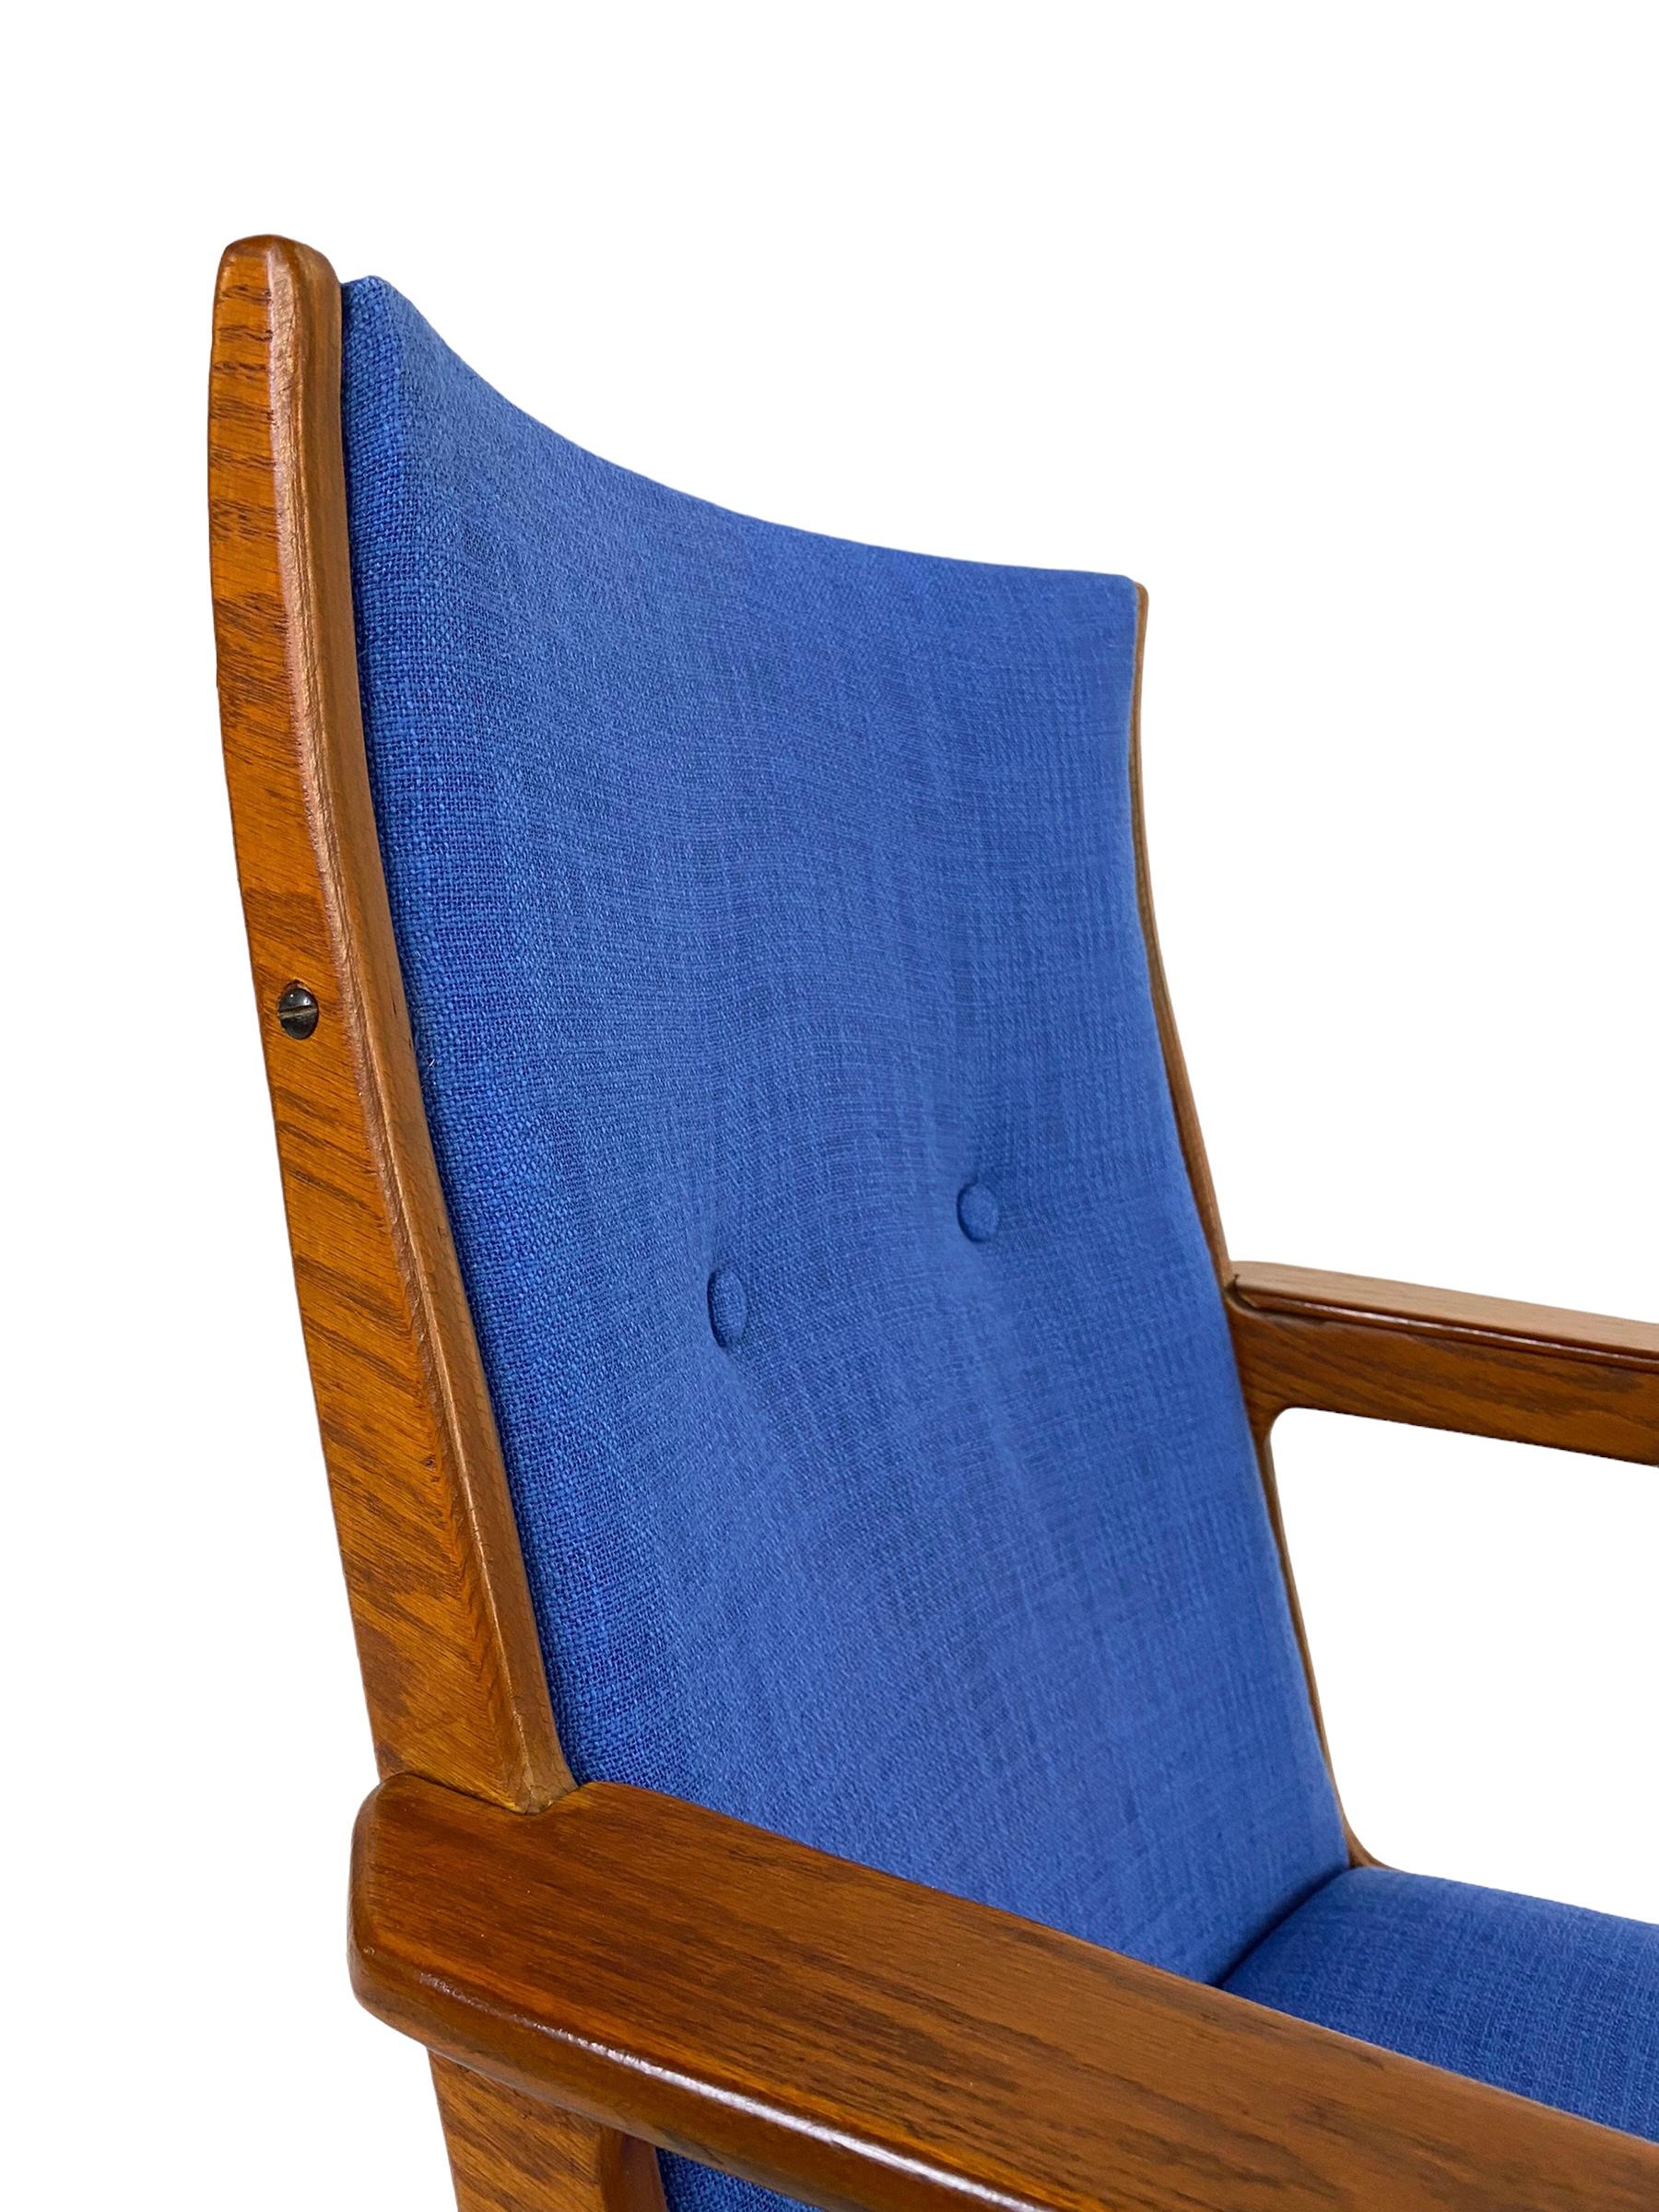 Danish Modern Rocking Chair Attributed to Georg Jensen For Sale 2